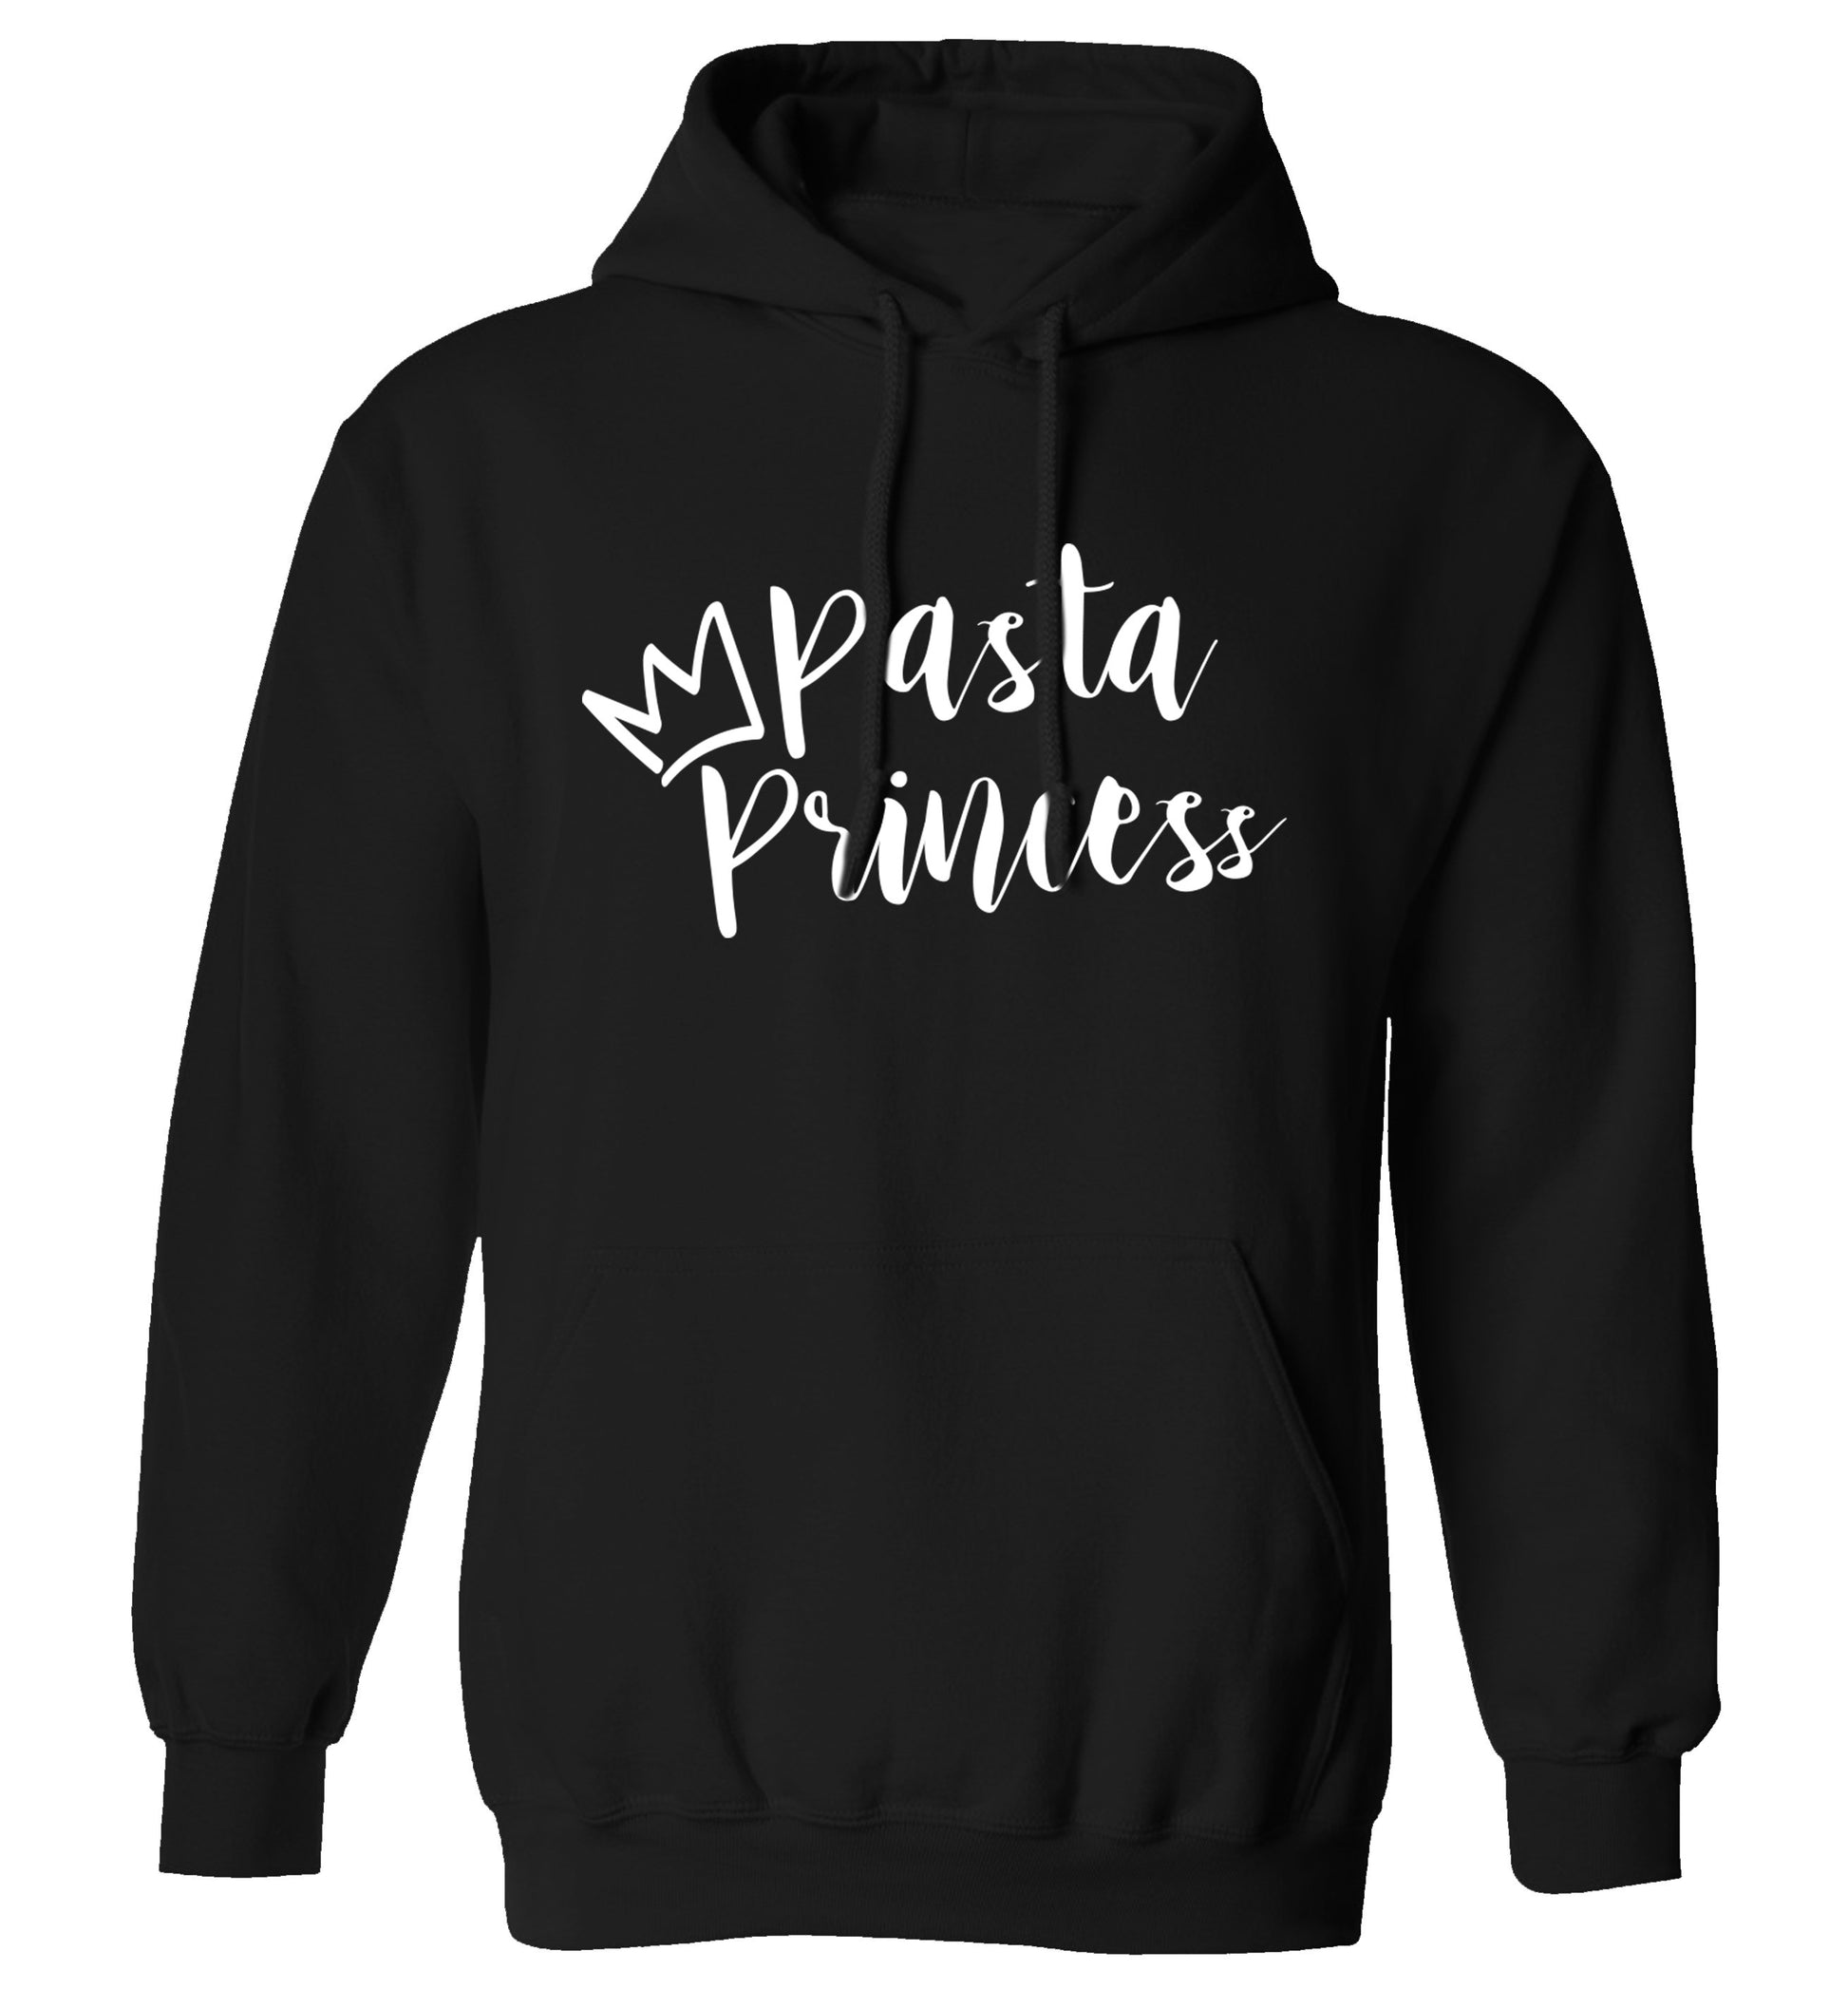 Pasta Princess adults unisex black hoodie 2XL